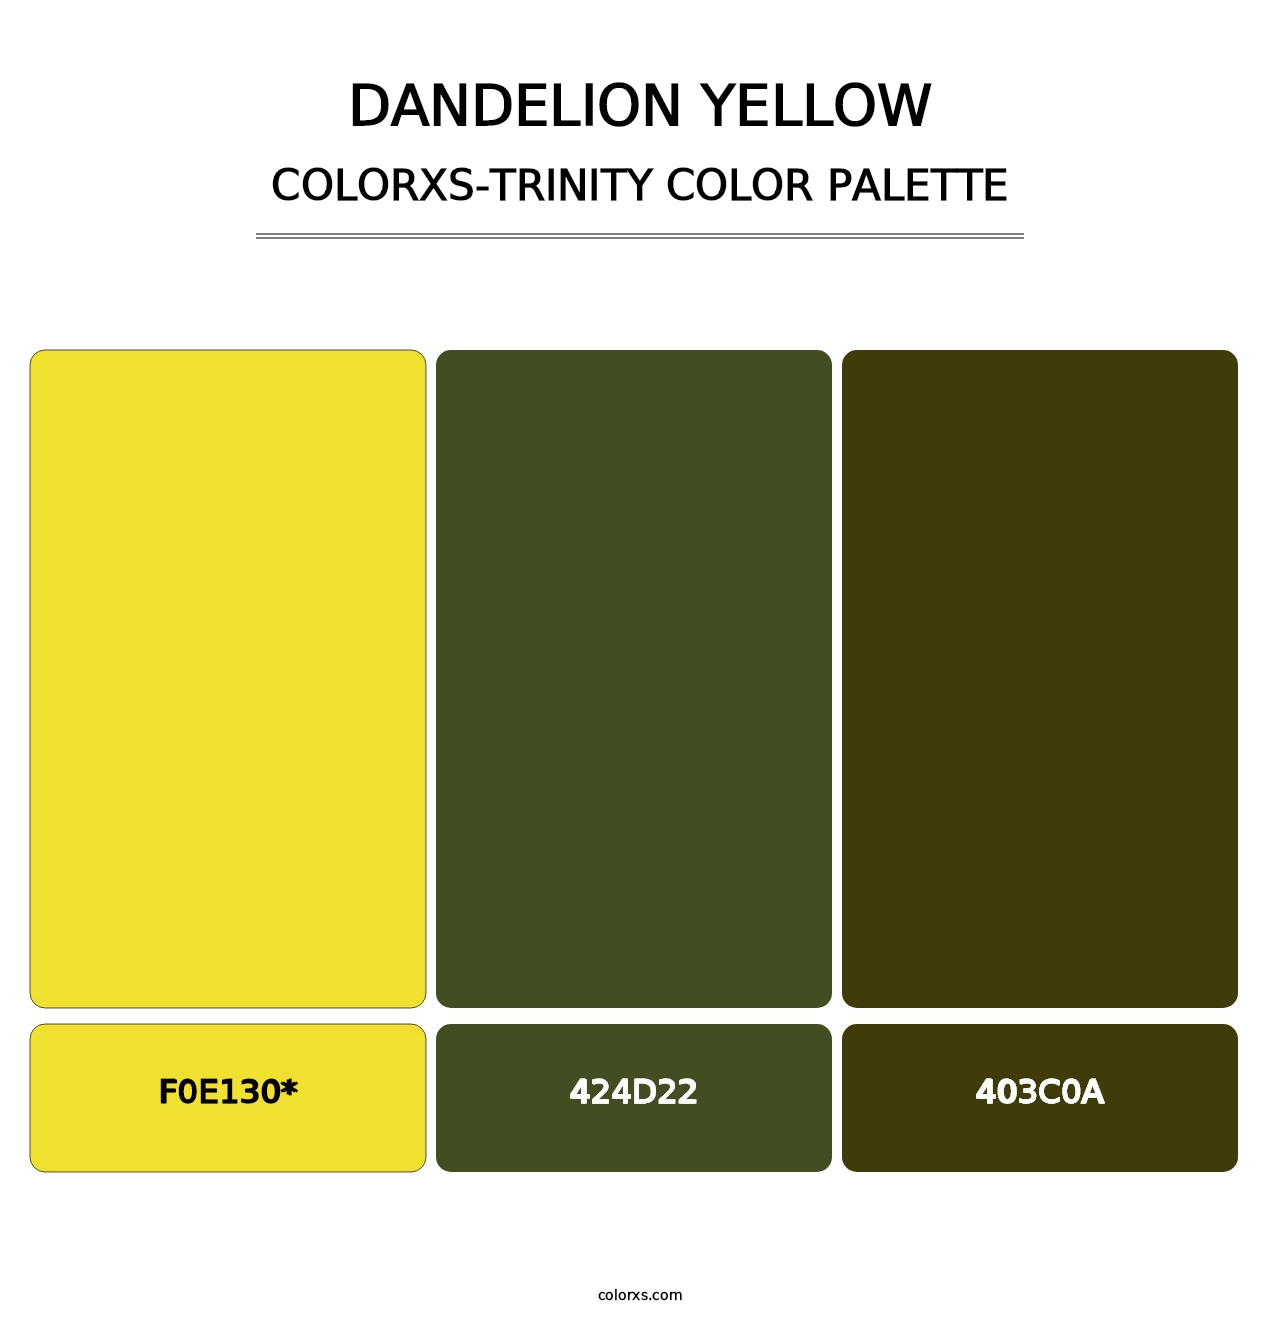 Dandelion Yellow - Colorxs Trinity Palette